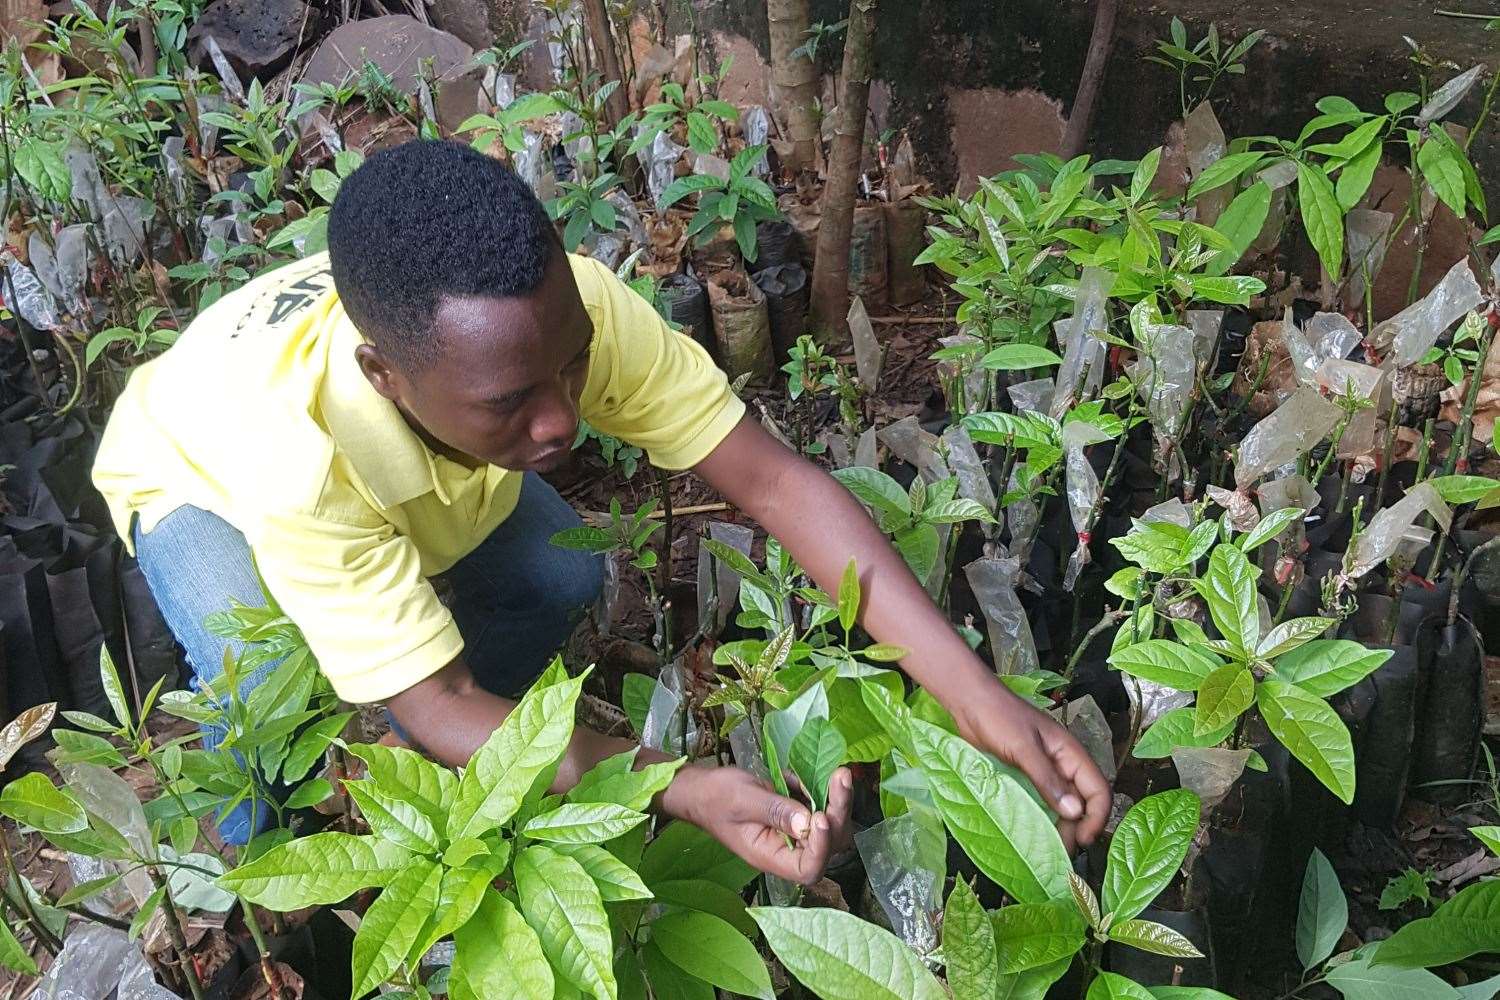 Avocado farmer Jolis Bigirimana said the costs of water in Burundi have increased because of climate change (Christian Aid/PA)